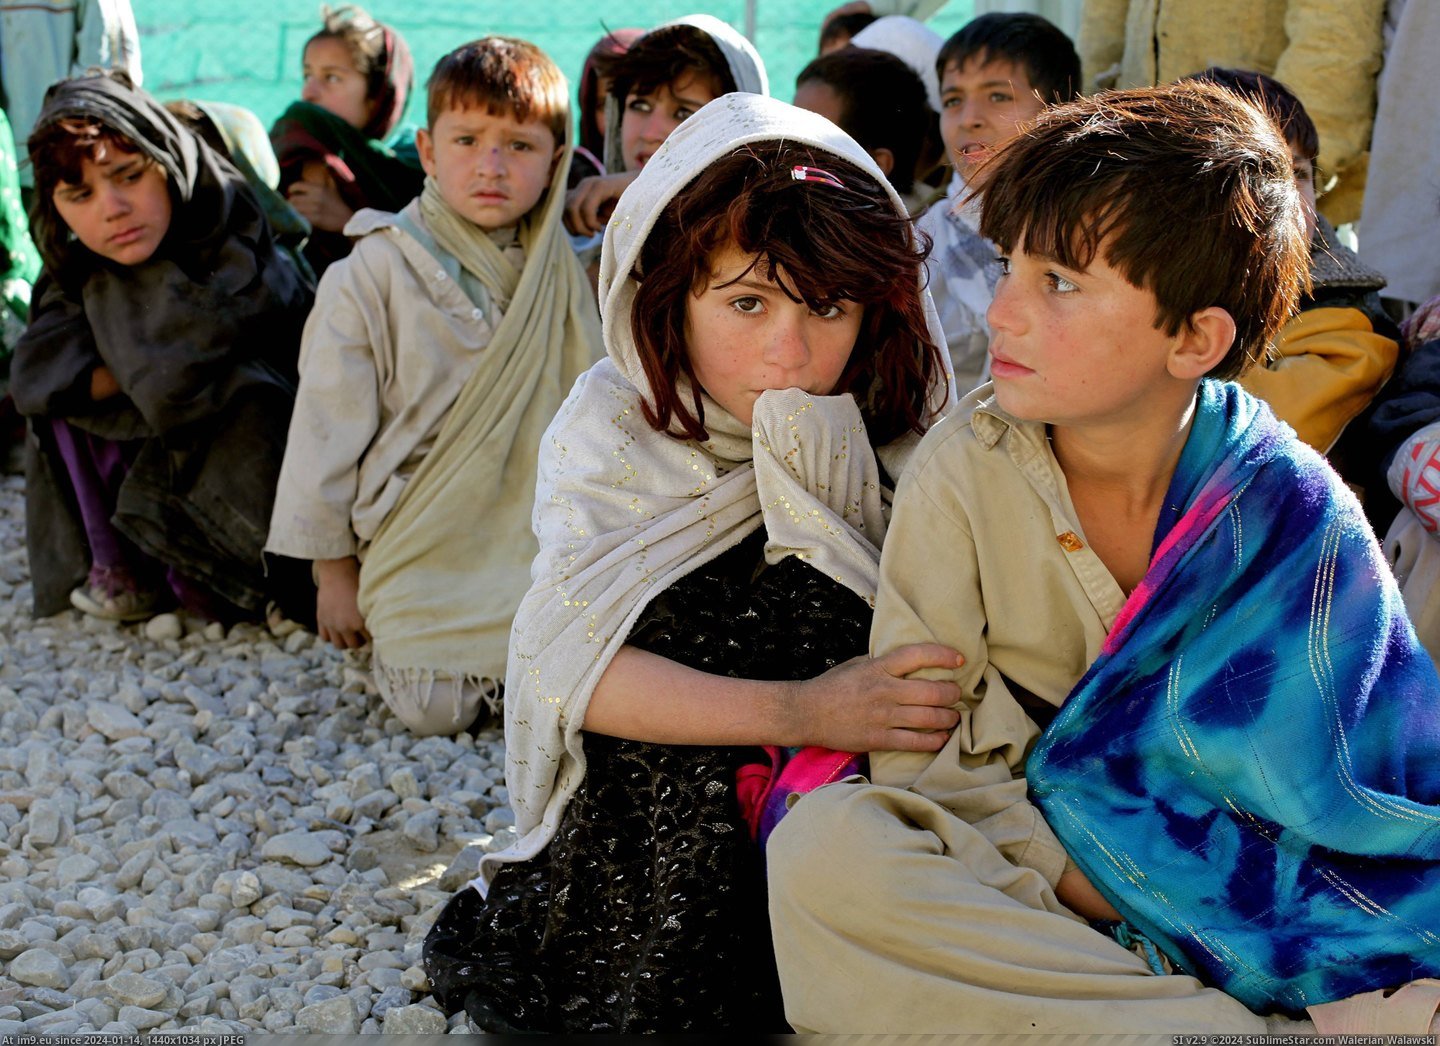 #Children #Khost #Pashtun #Afghanistan [Pics] Pashtun children from Khost, Afghanistan Pic. (Изображение из альбом My r/PICS favs))